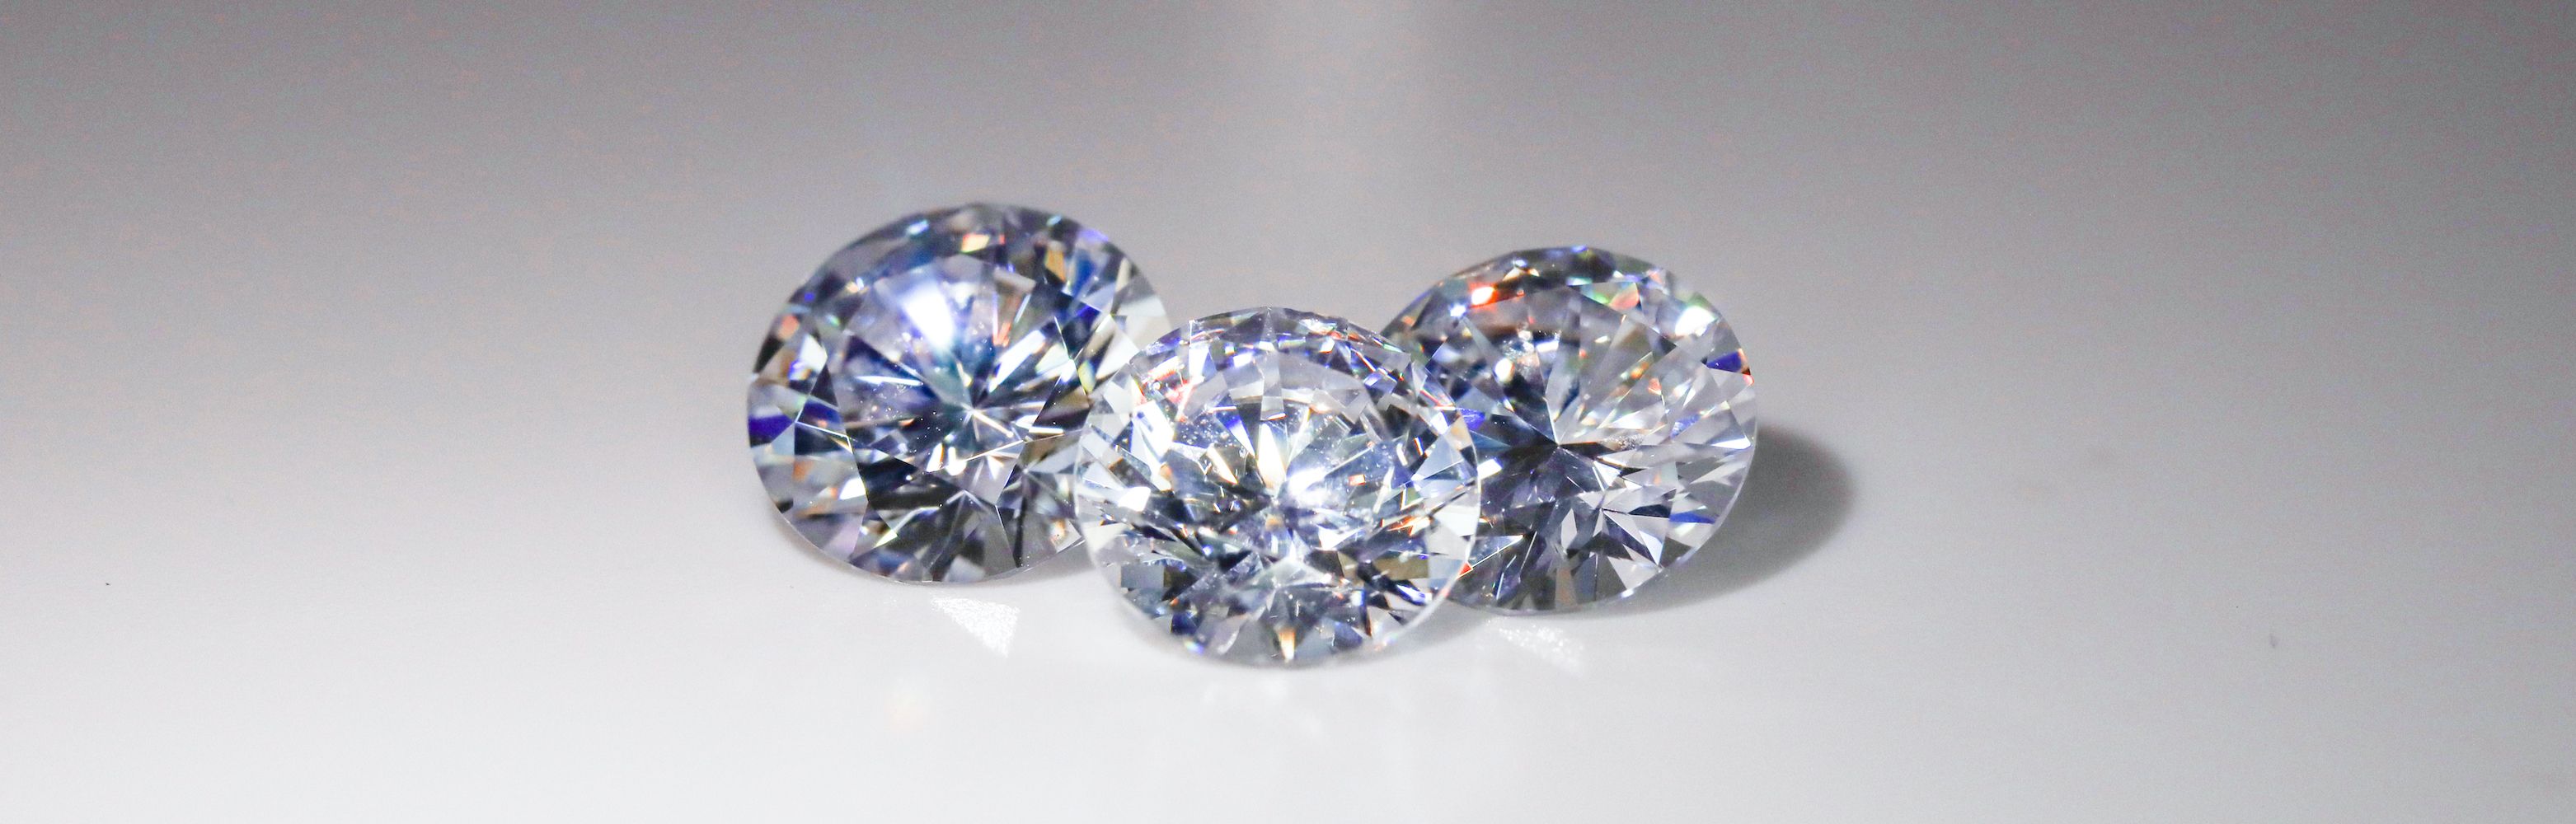 loose round-cut diamonds